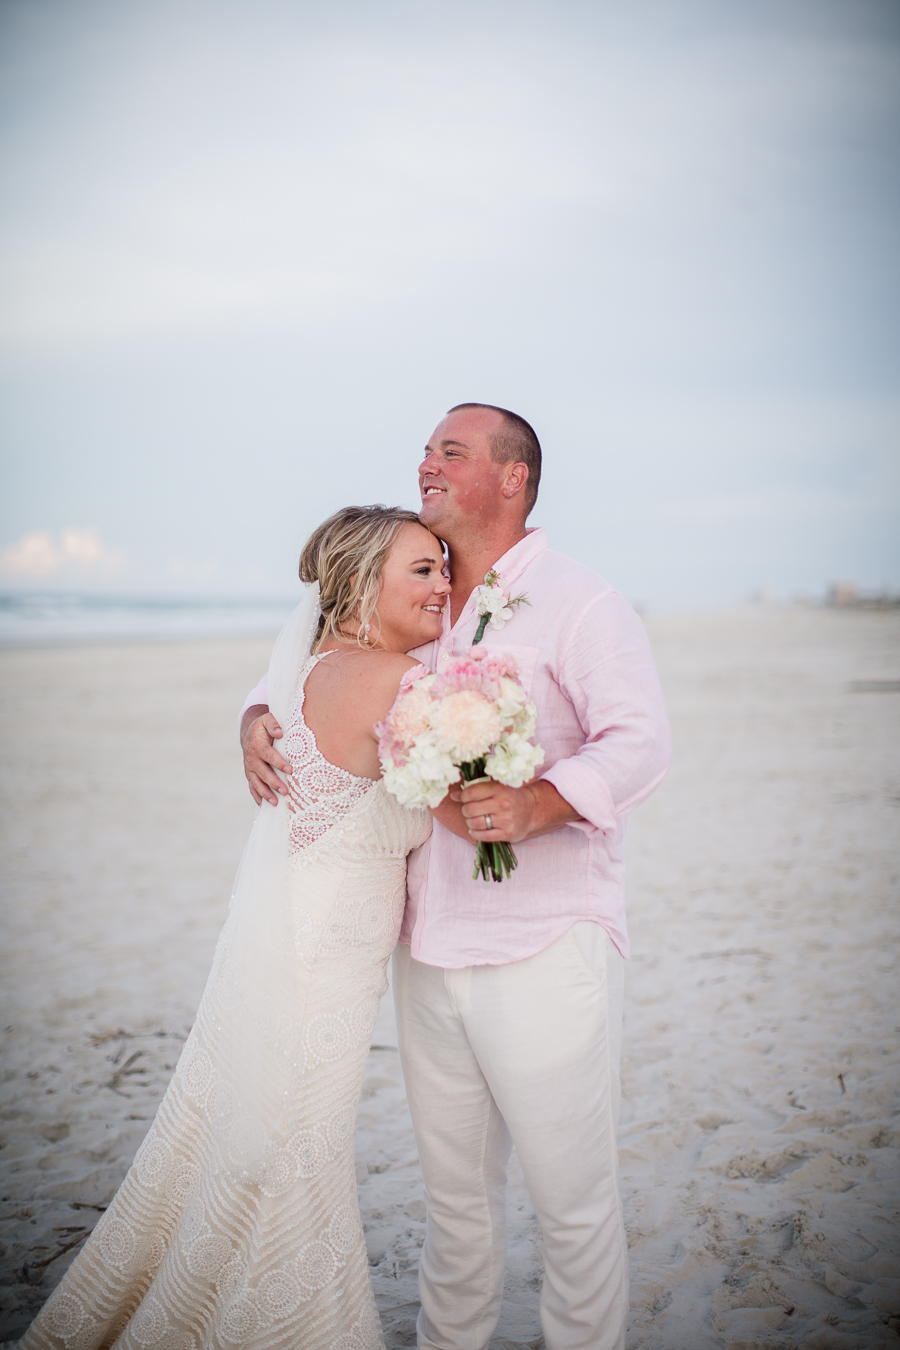 Hugging on the beach at this Daytona Beach Wedding by Destination Wedding Photographer, Amanda May Photos.